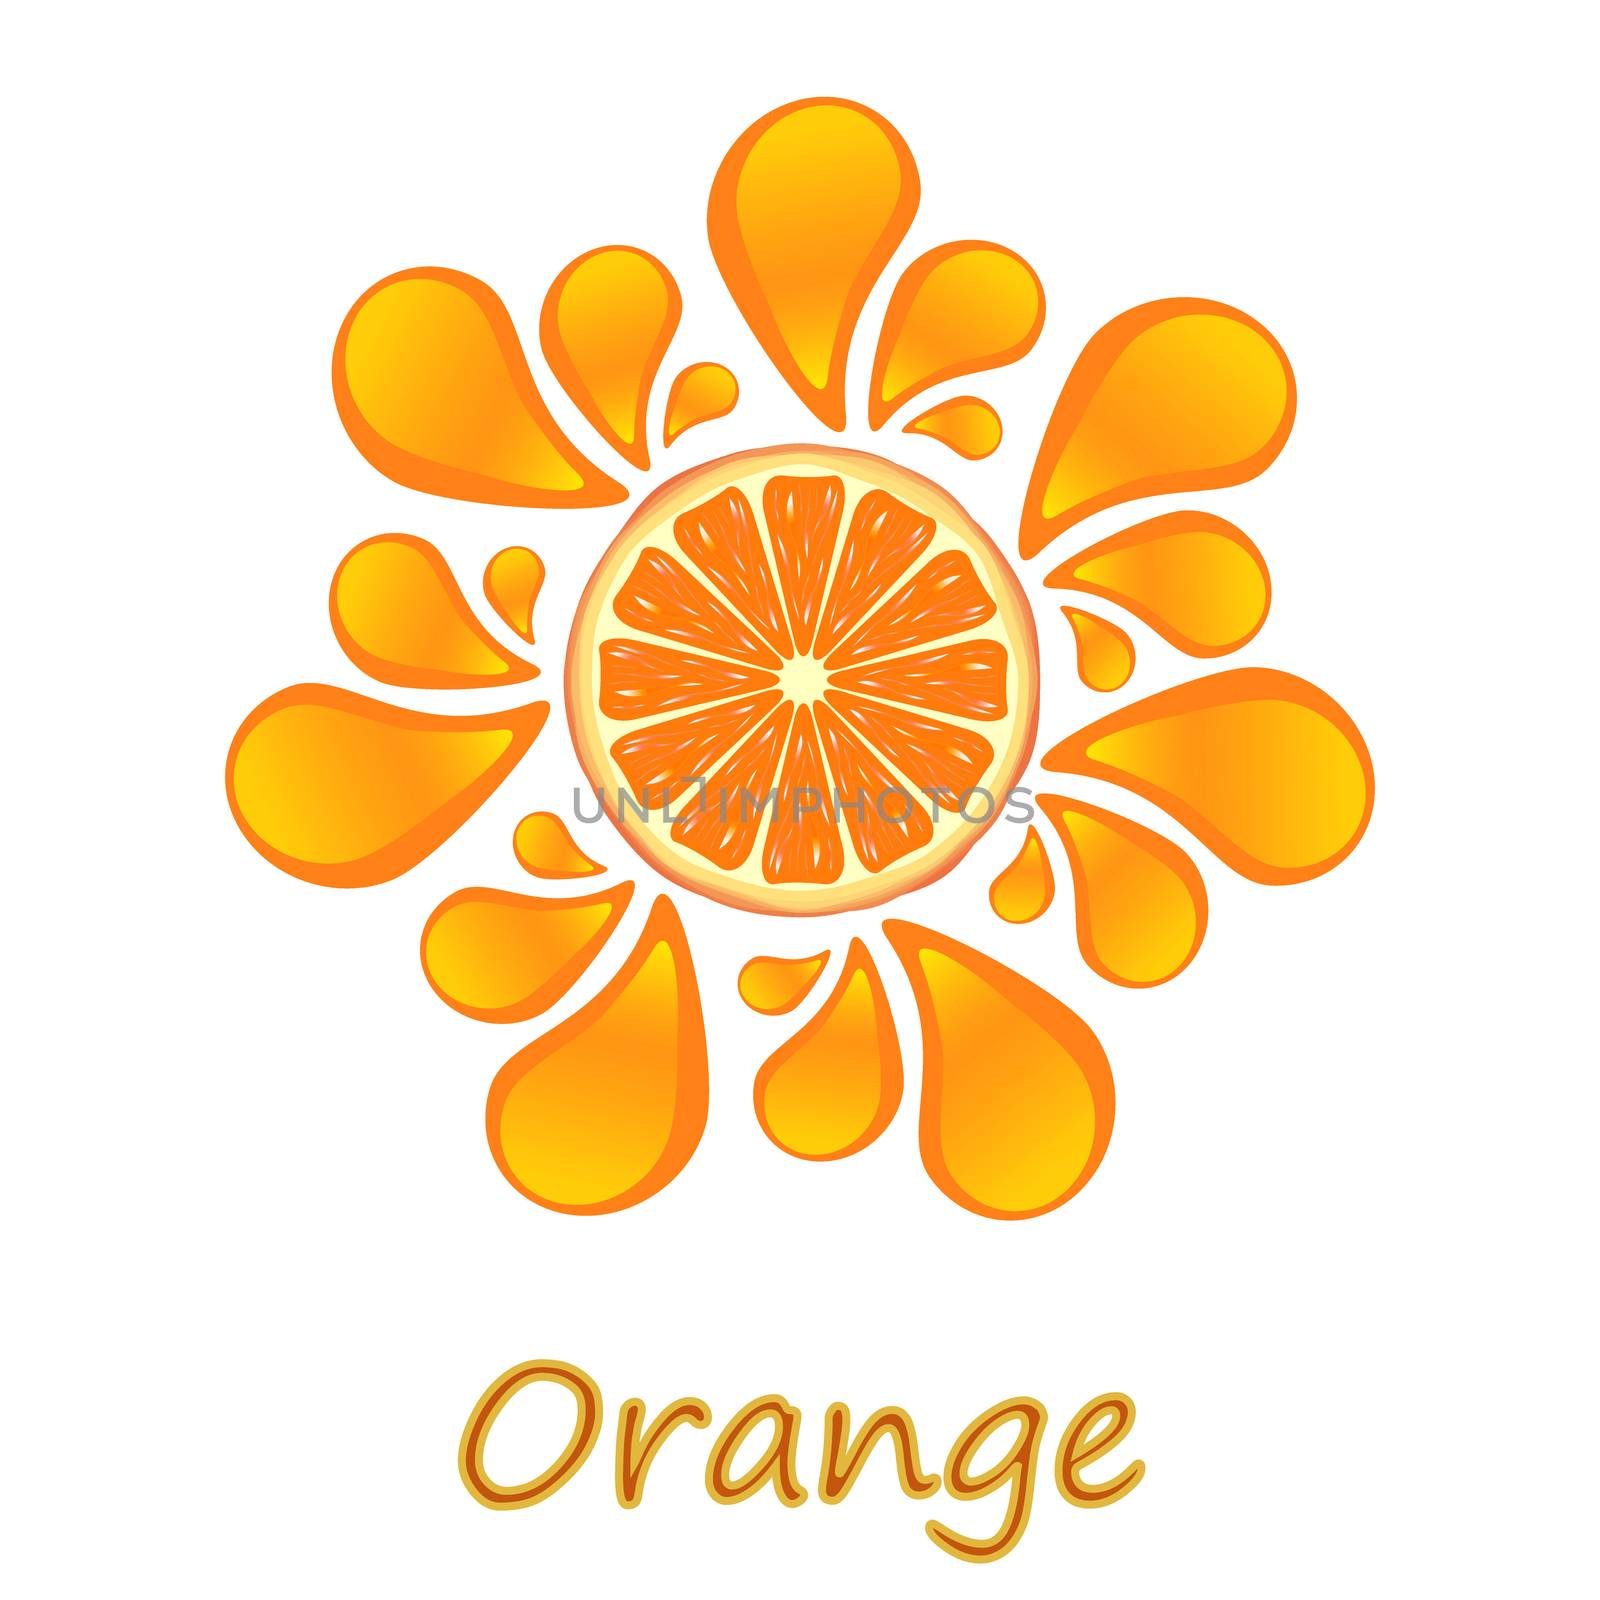 Bright illustration of orange slice with juice drops around